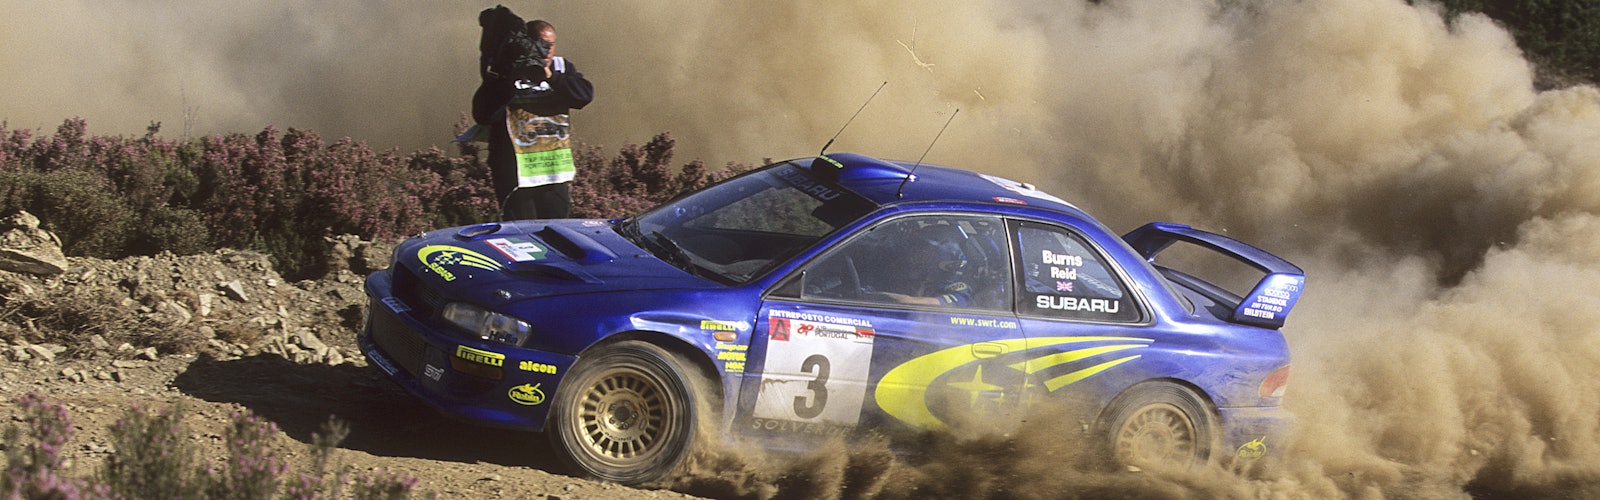 2000 Portugal Rally world wide copyright: McKlein